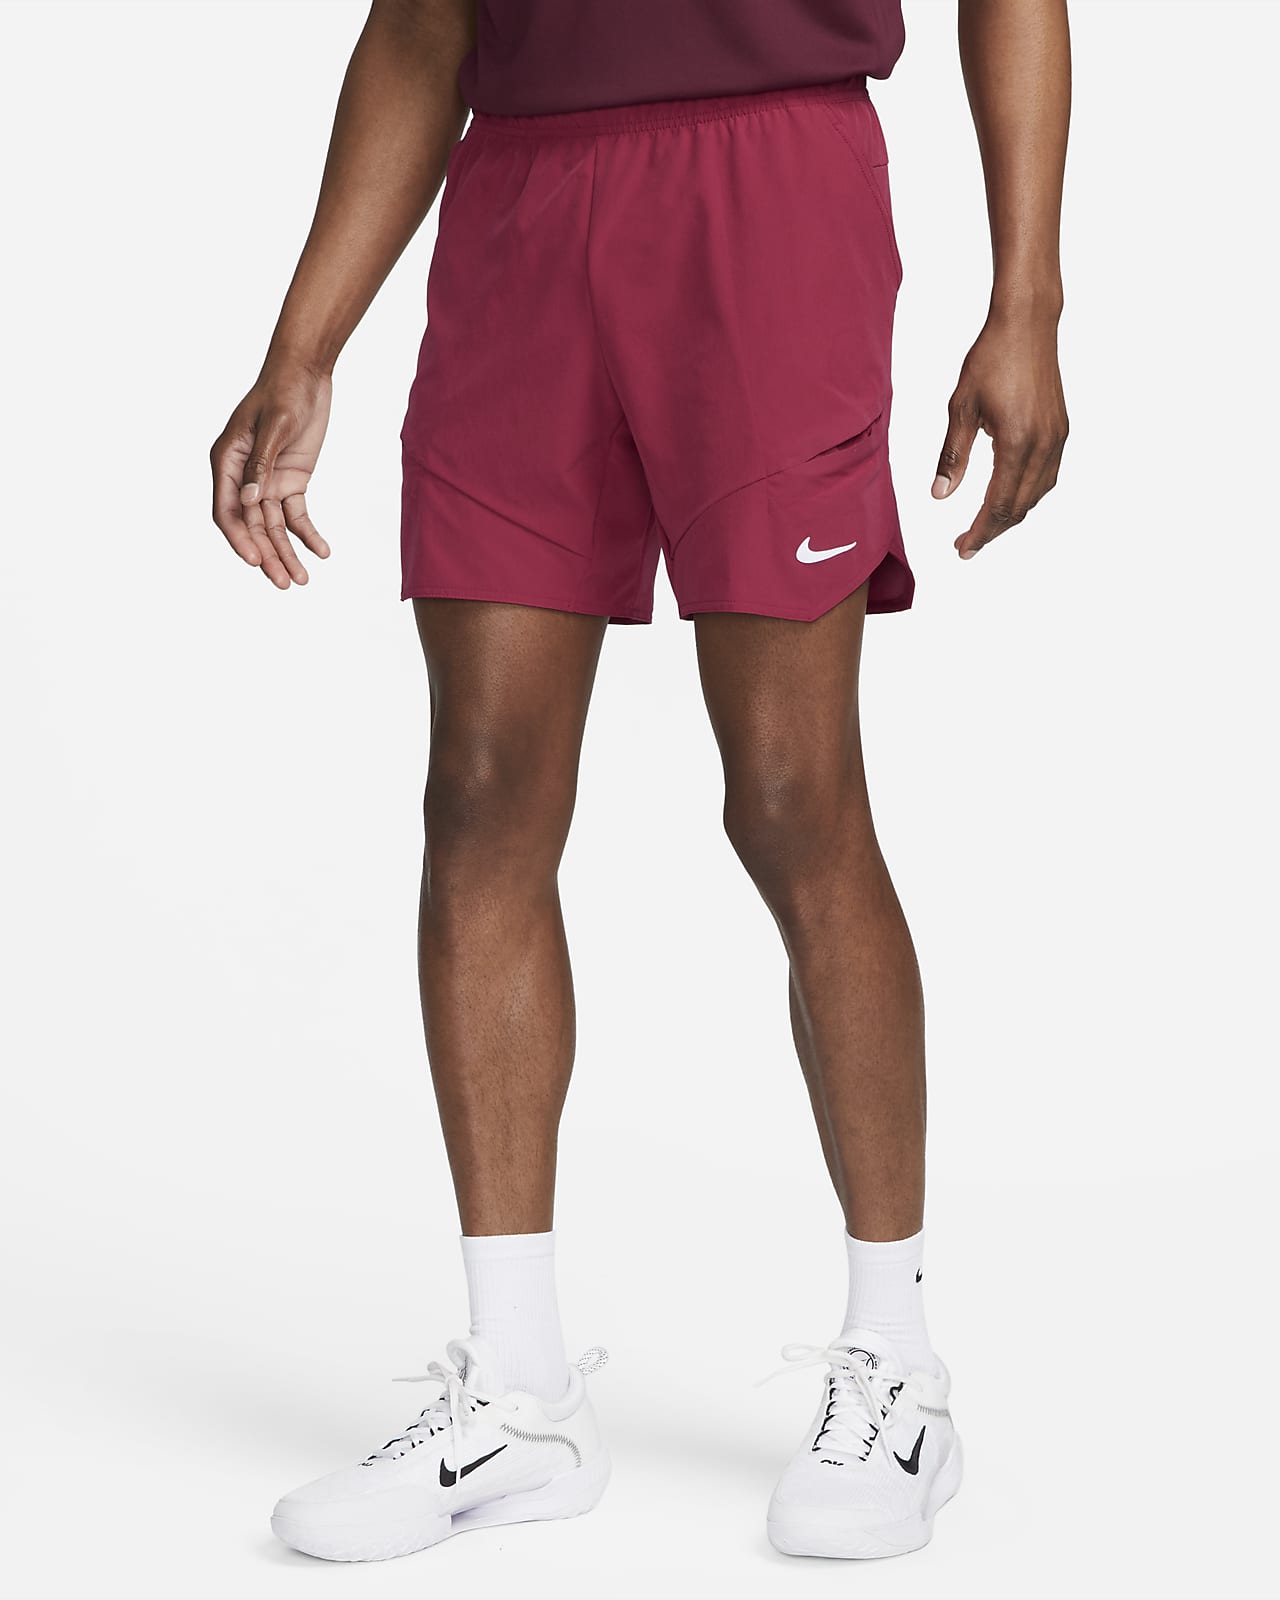 NikeCourt Dri-FIT Advantage Men's 7" Tennis Shorts.